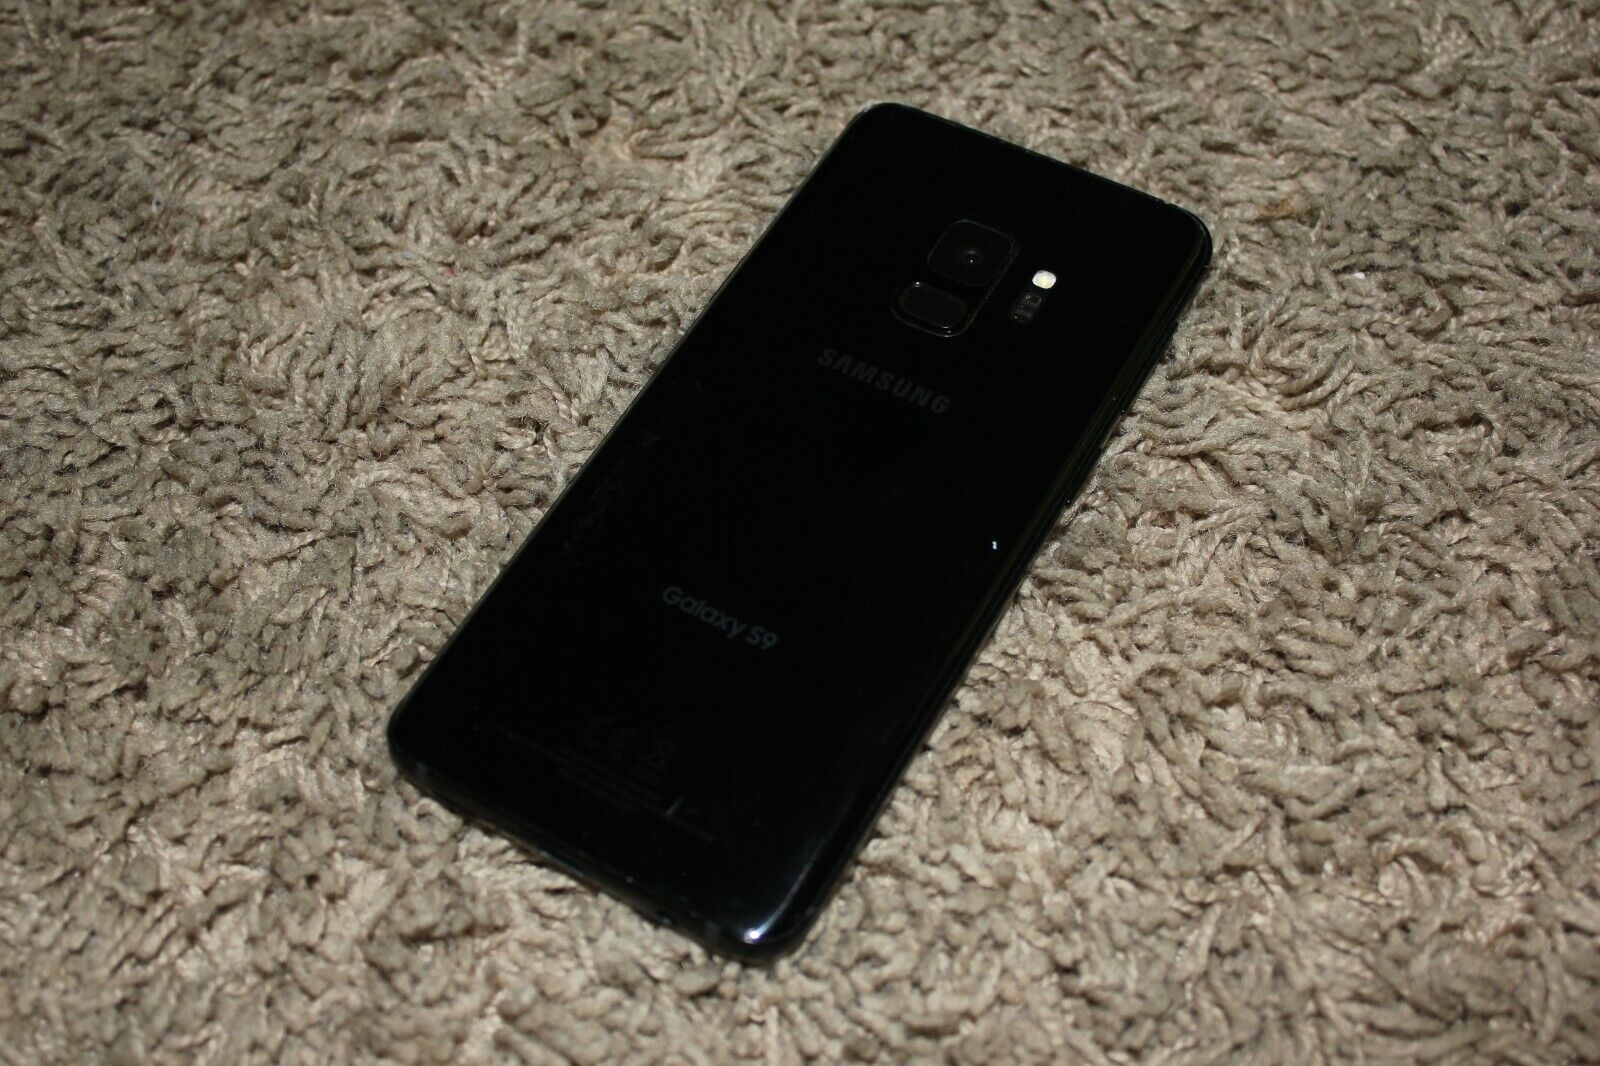  SAMSUNG GALAXY S9 Cell Phone Black Xfinity Mobile 64GB SM-G960U